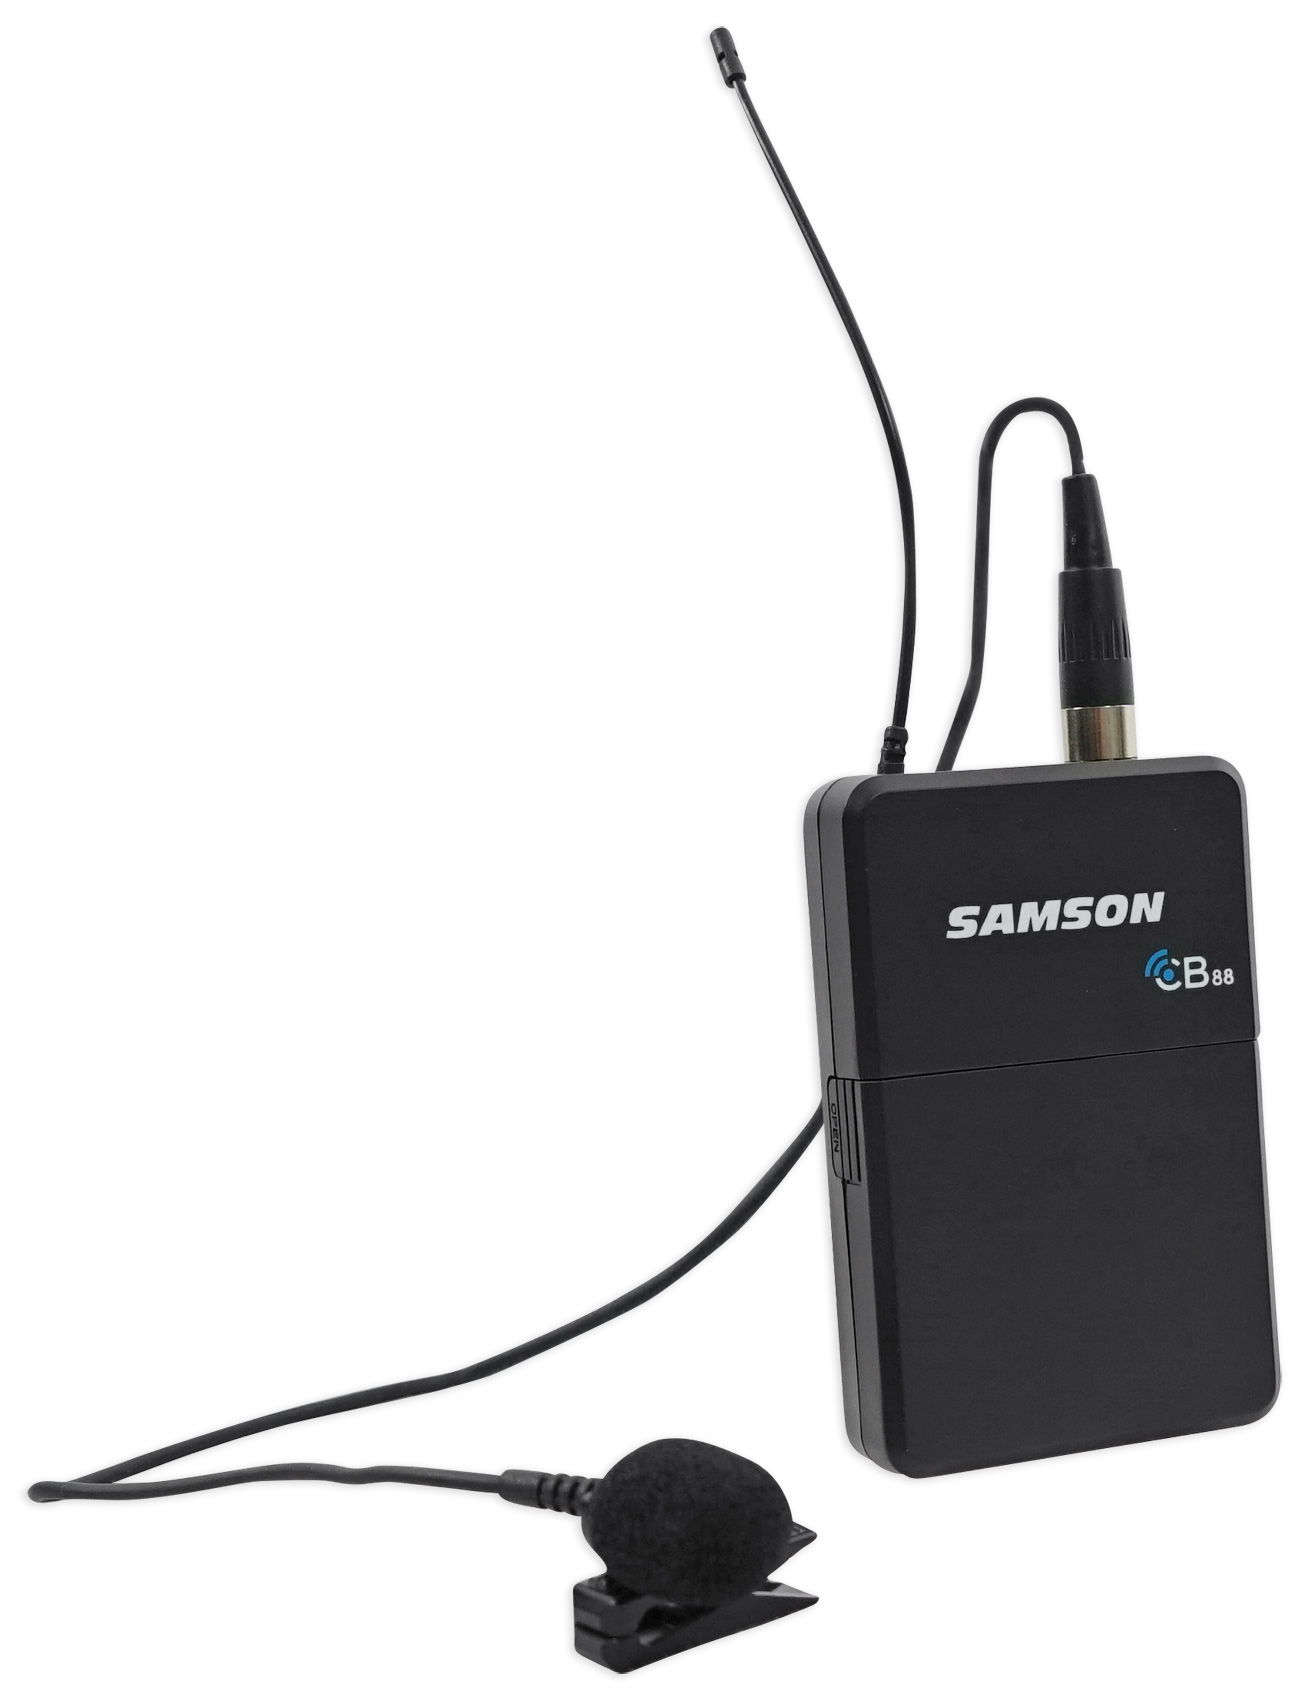 SAMSON Concert 88 Presentation Wireless Lavalier LM5 Lav Mic+Headphones